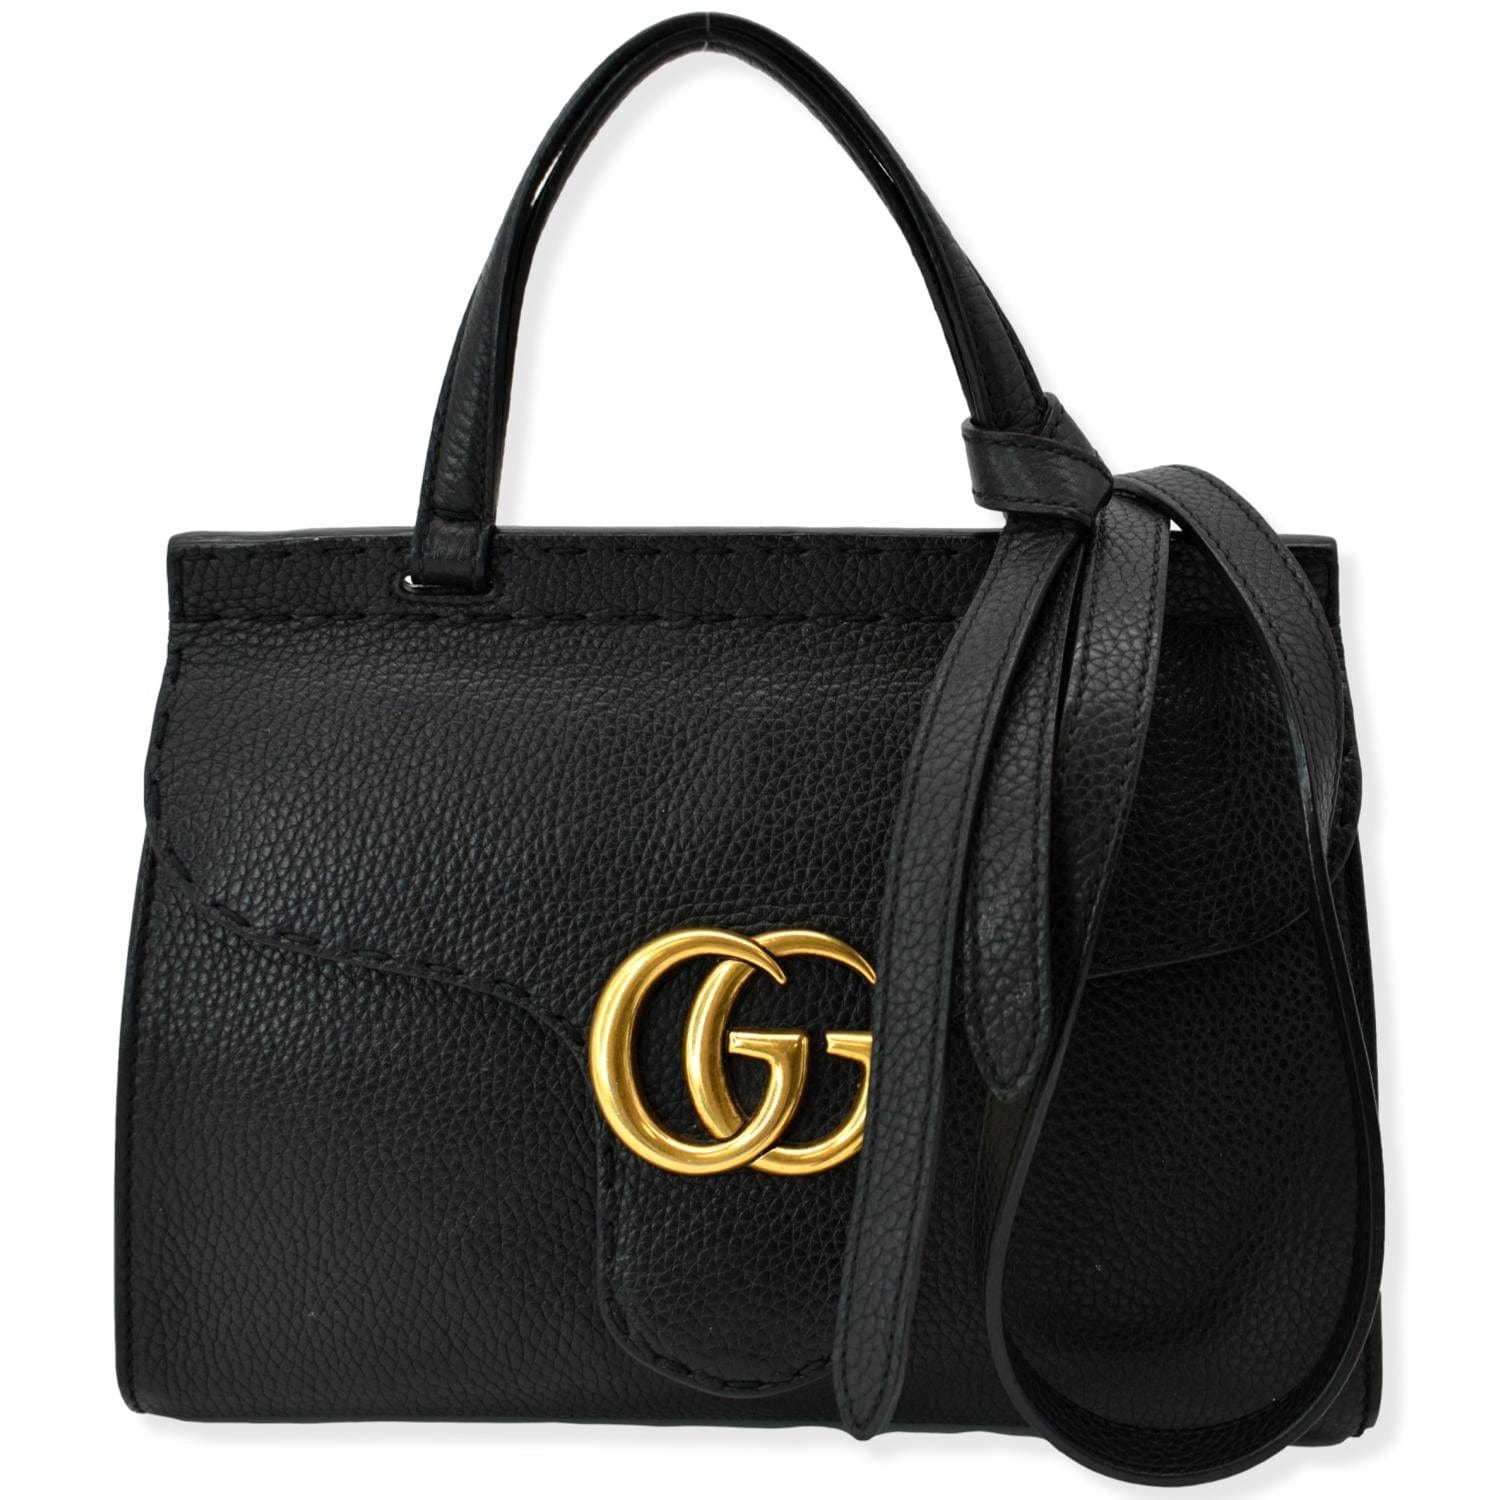 GUCCI GG Marmont Top Handle Bag